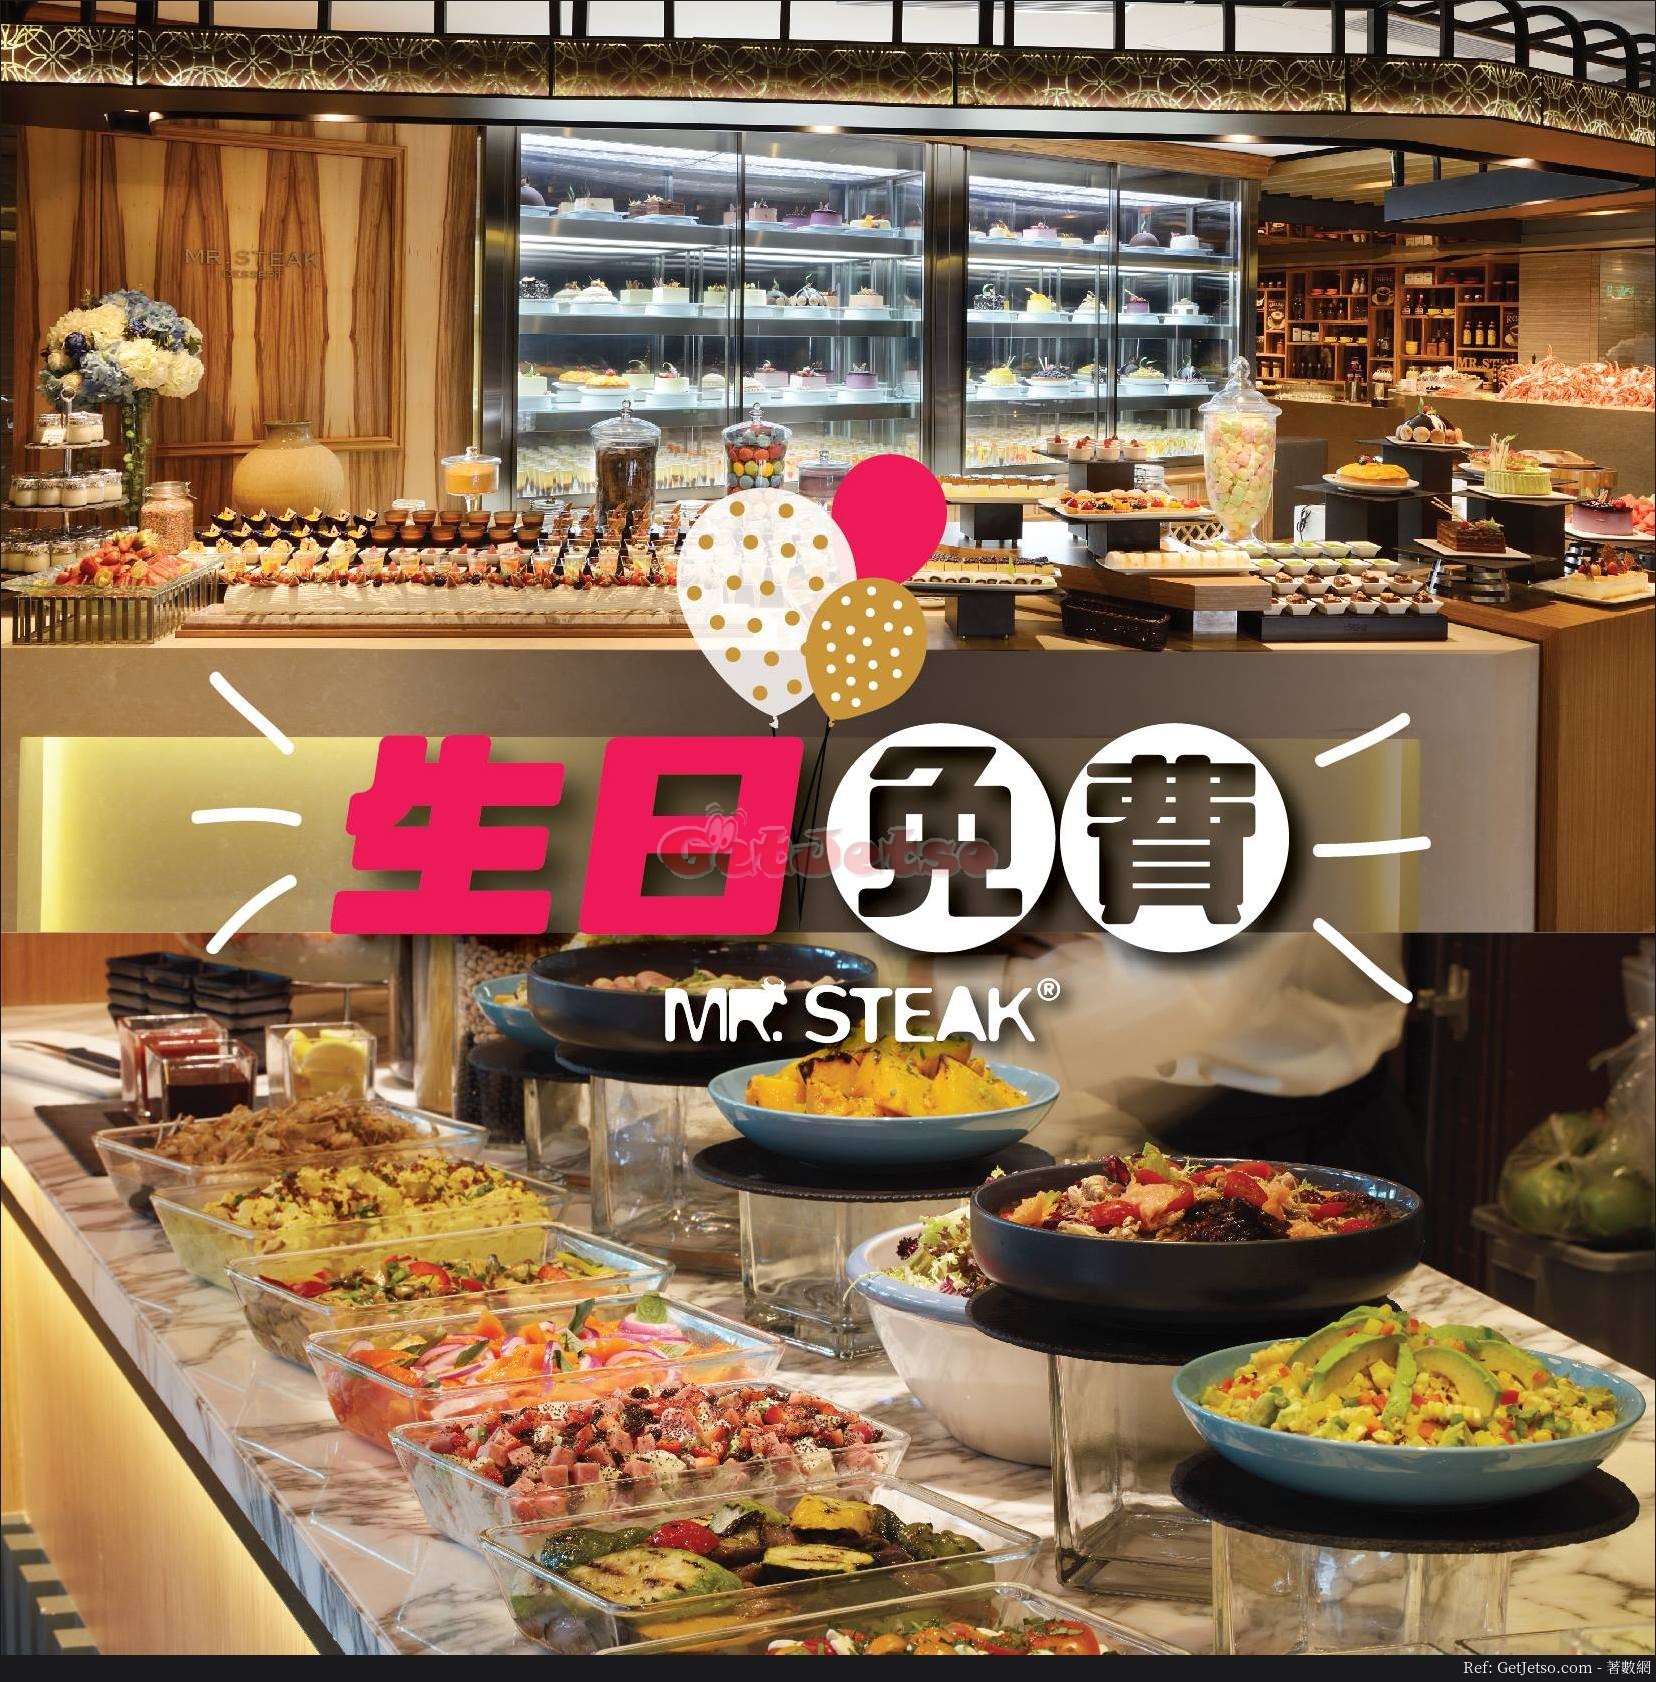 Mr.Steak Buffet 生日之星免費同行朋友88折晚市自助餐優惠(至19年3月31日)圖片1